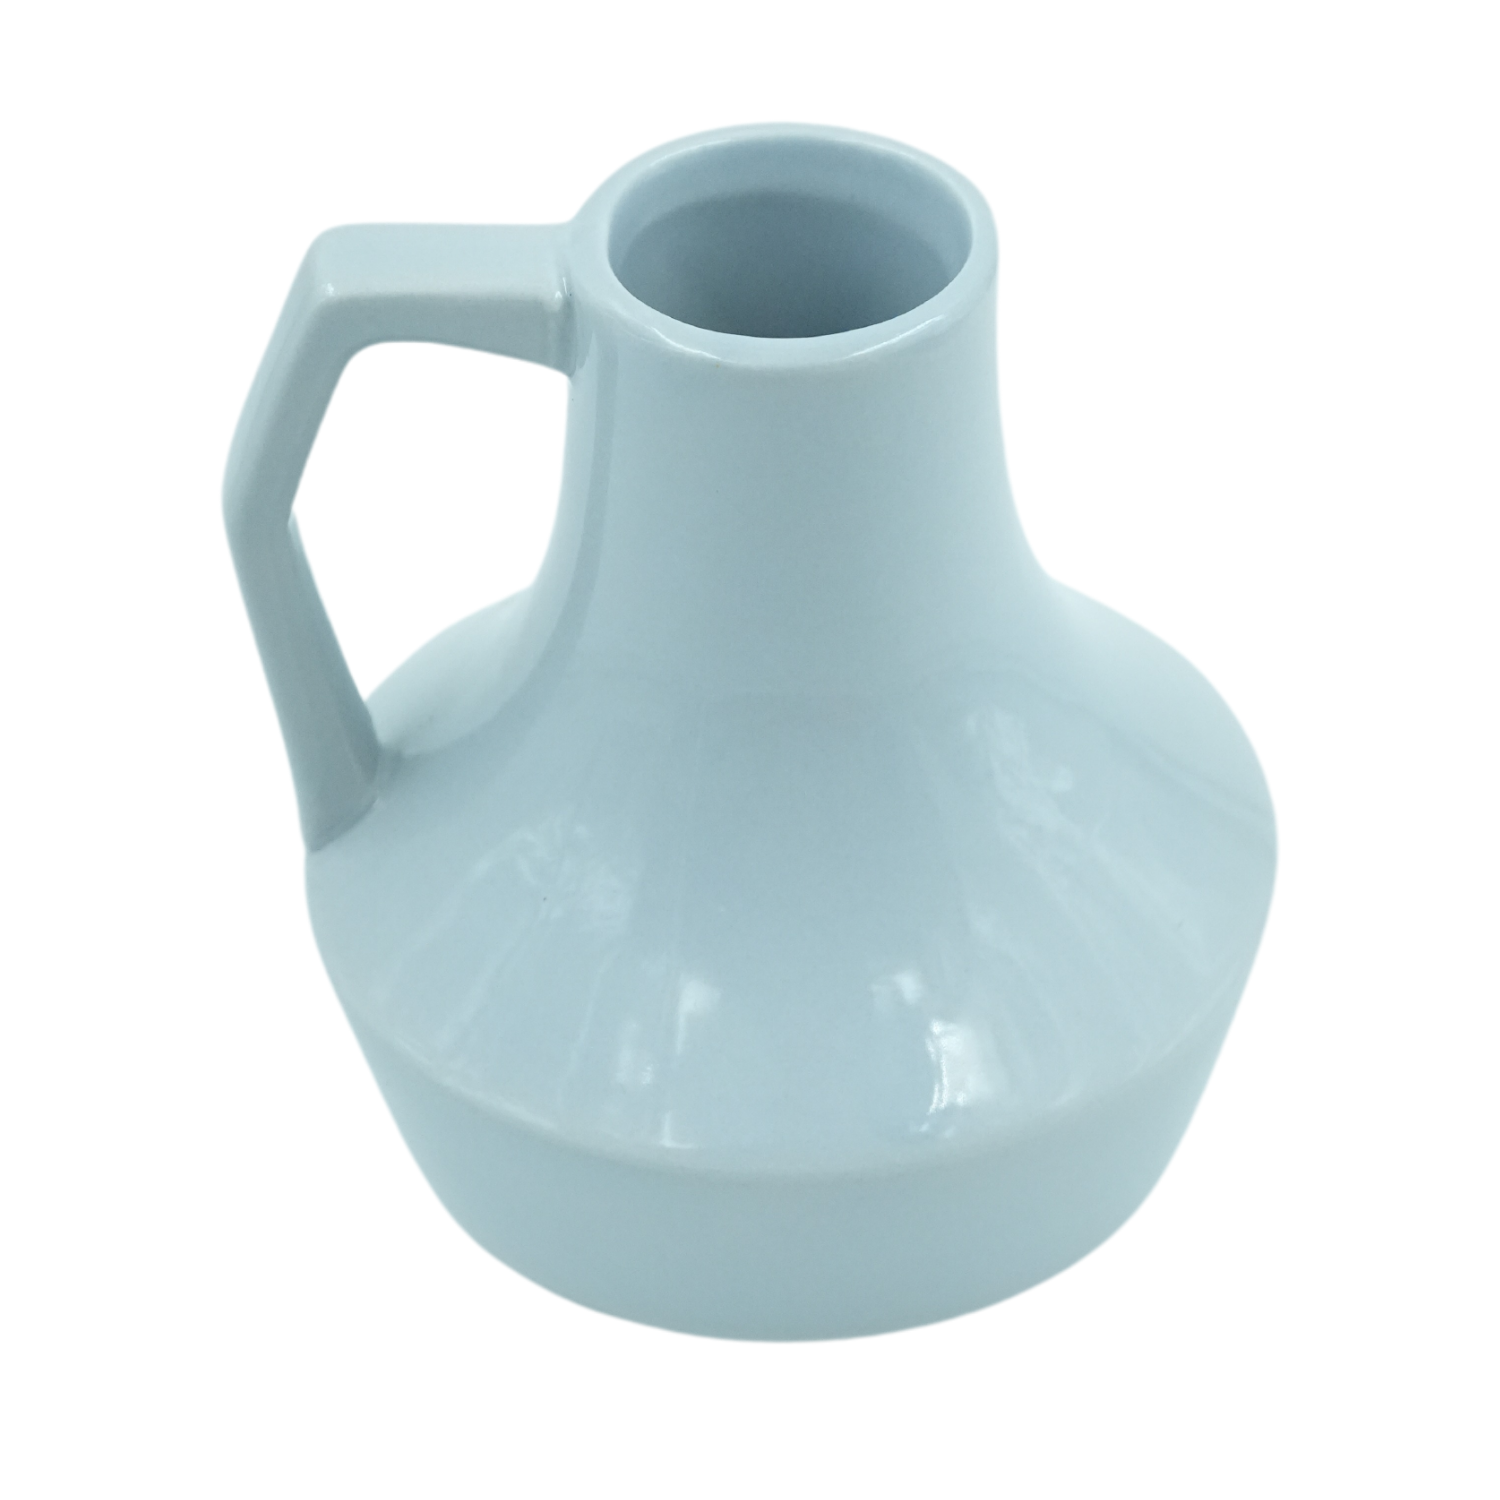 Designer Ceramic Pot (Grey,Glossy Finish,Medium) for Home & Indoor Plant Decor